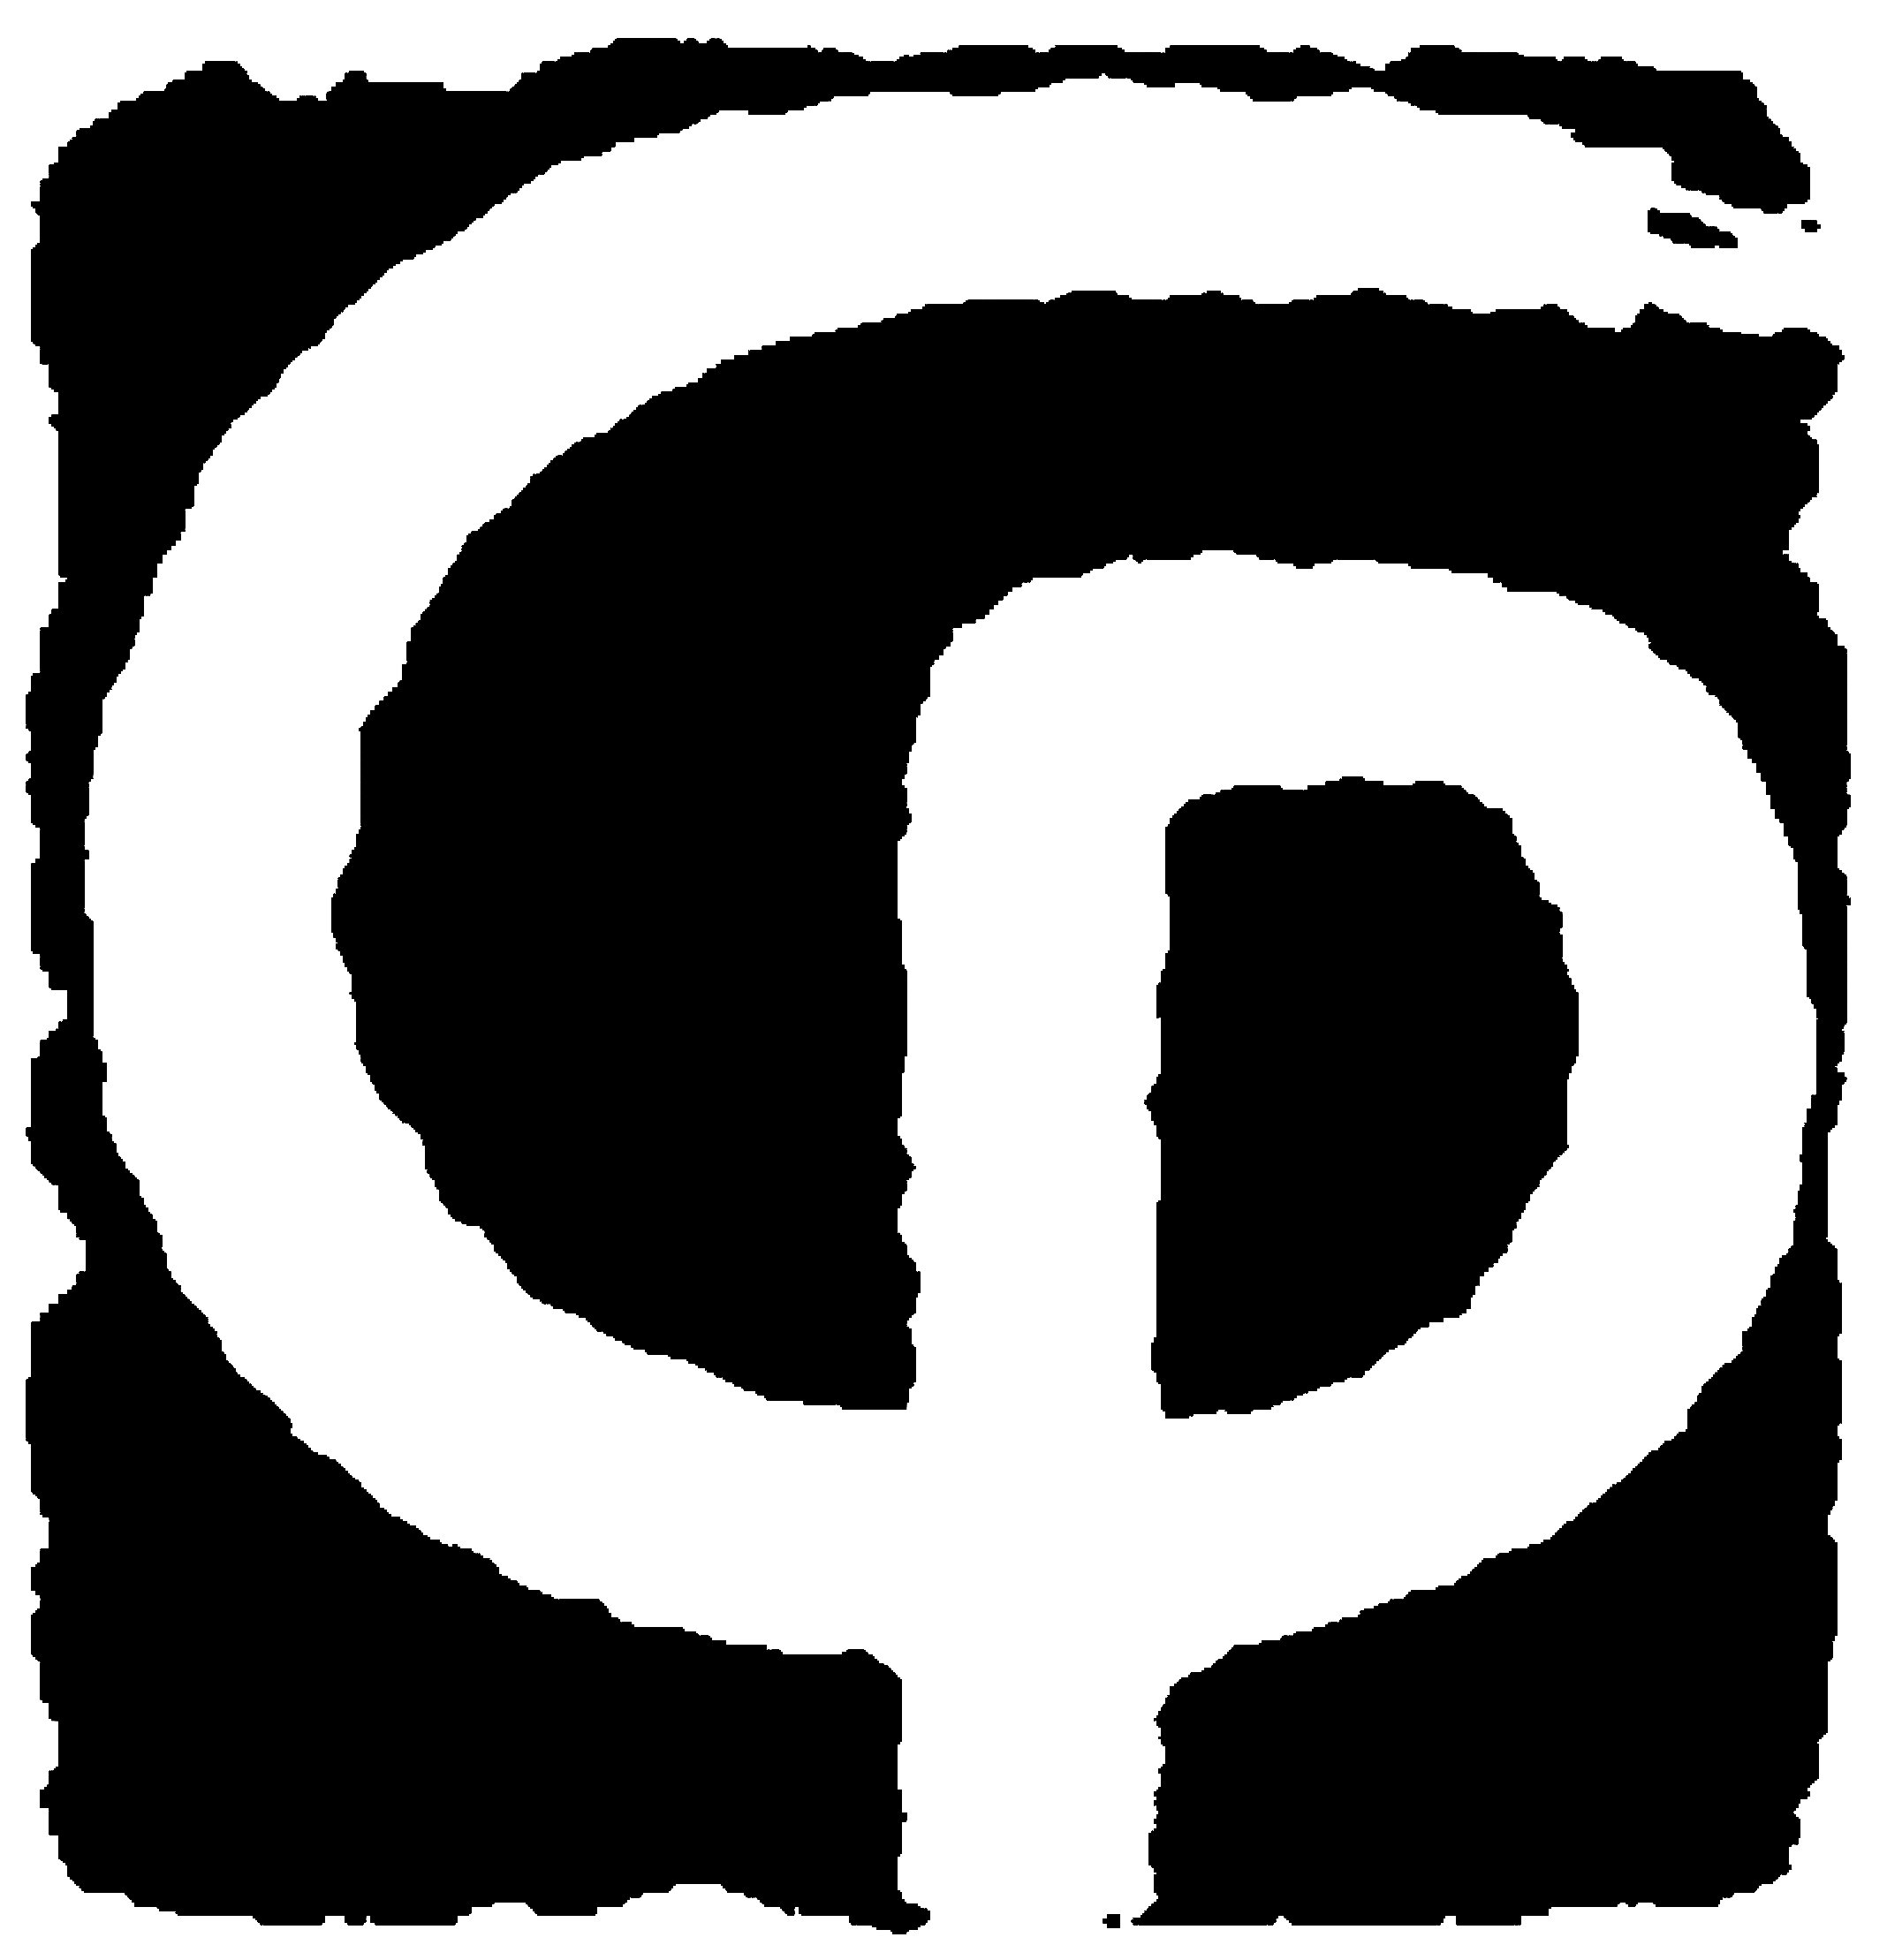 Trademark Logo C P